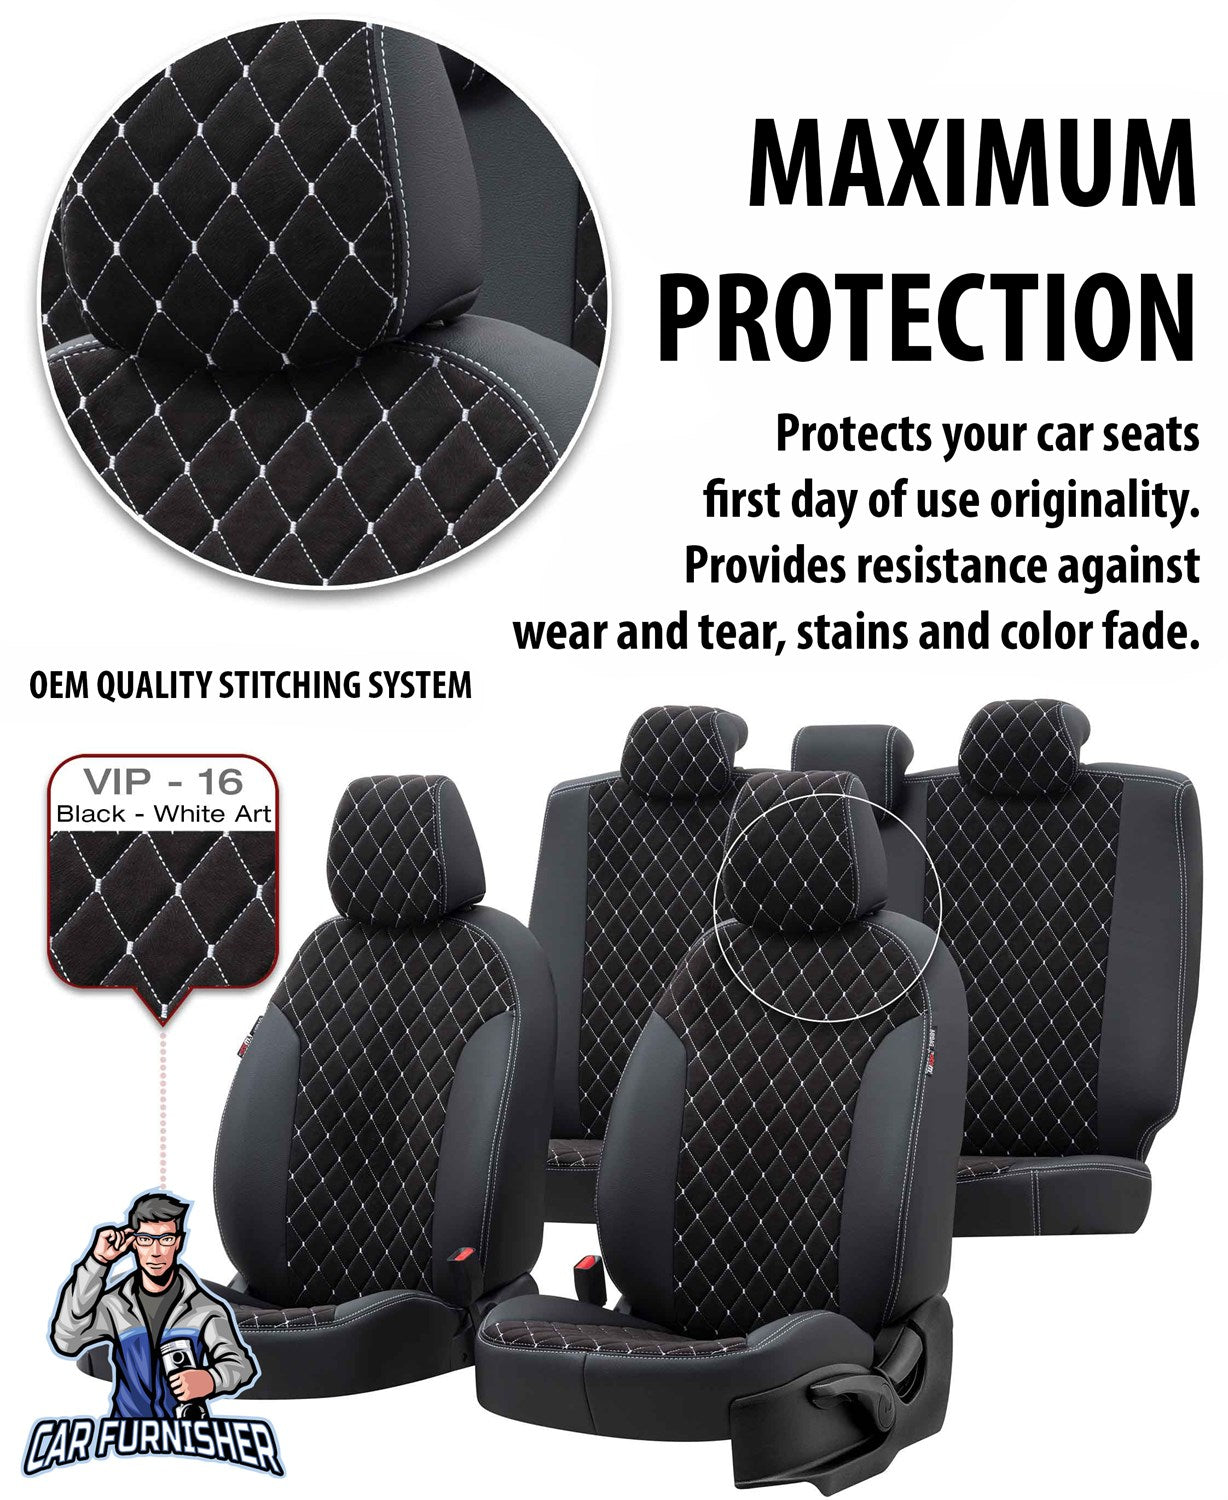 Kia Venga Seat Cover Camouflage Waterproof Design Dark Gray Leather & Foal Feather